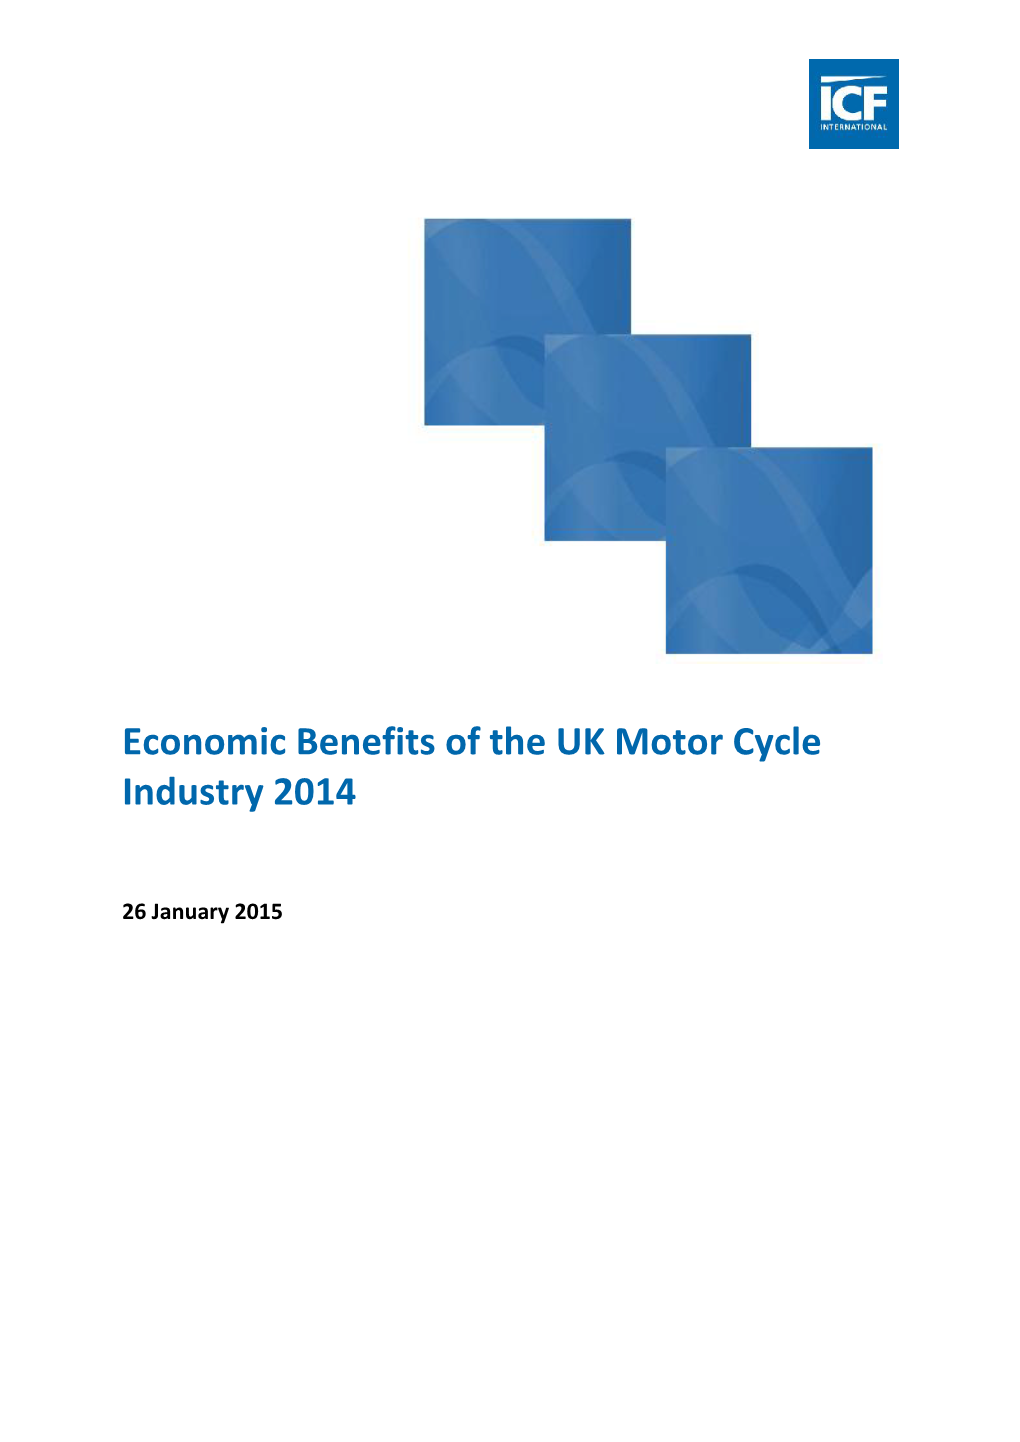 Economic Benefits of the UK Motor Cycle Industry 2014